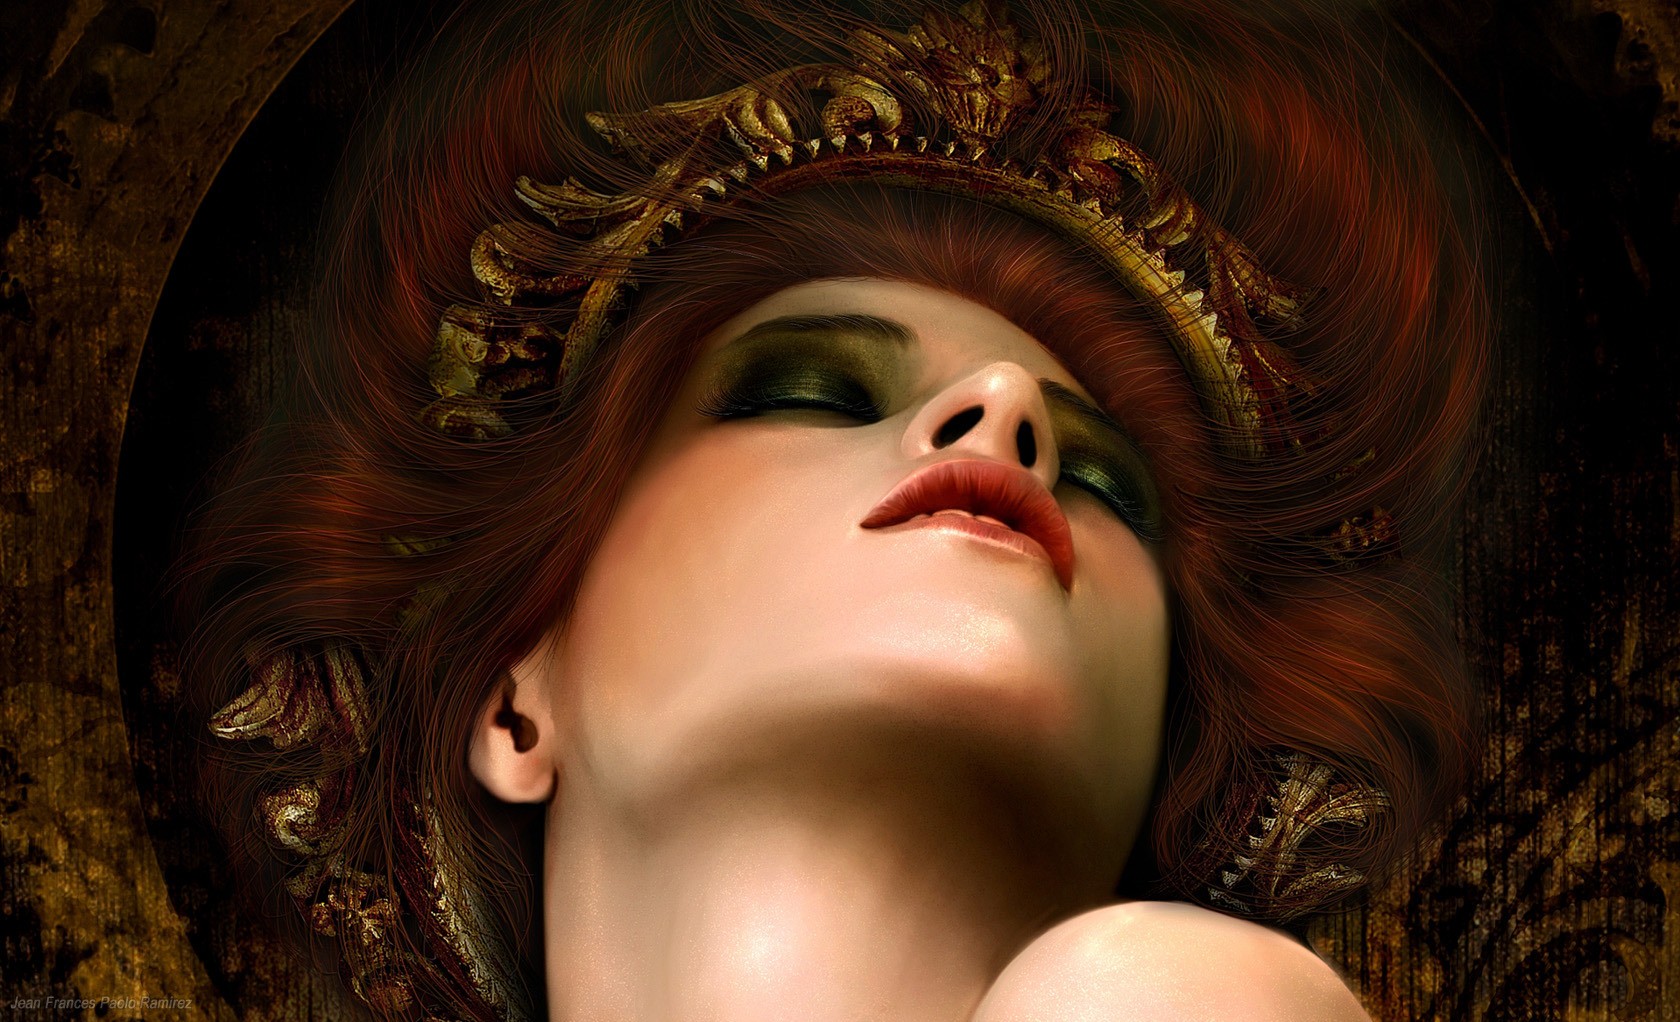 General 1680x1022 redhead fantasy girl fantasy art face women artwork closeup makeup red lipstick